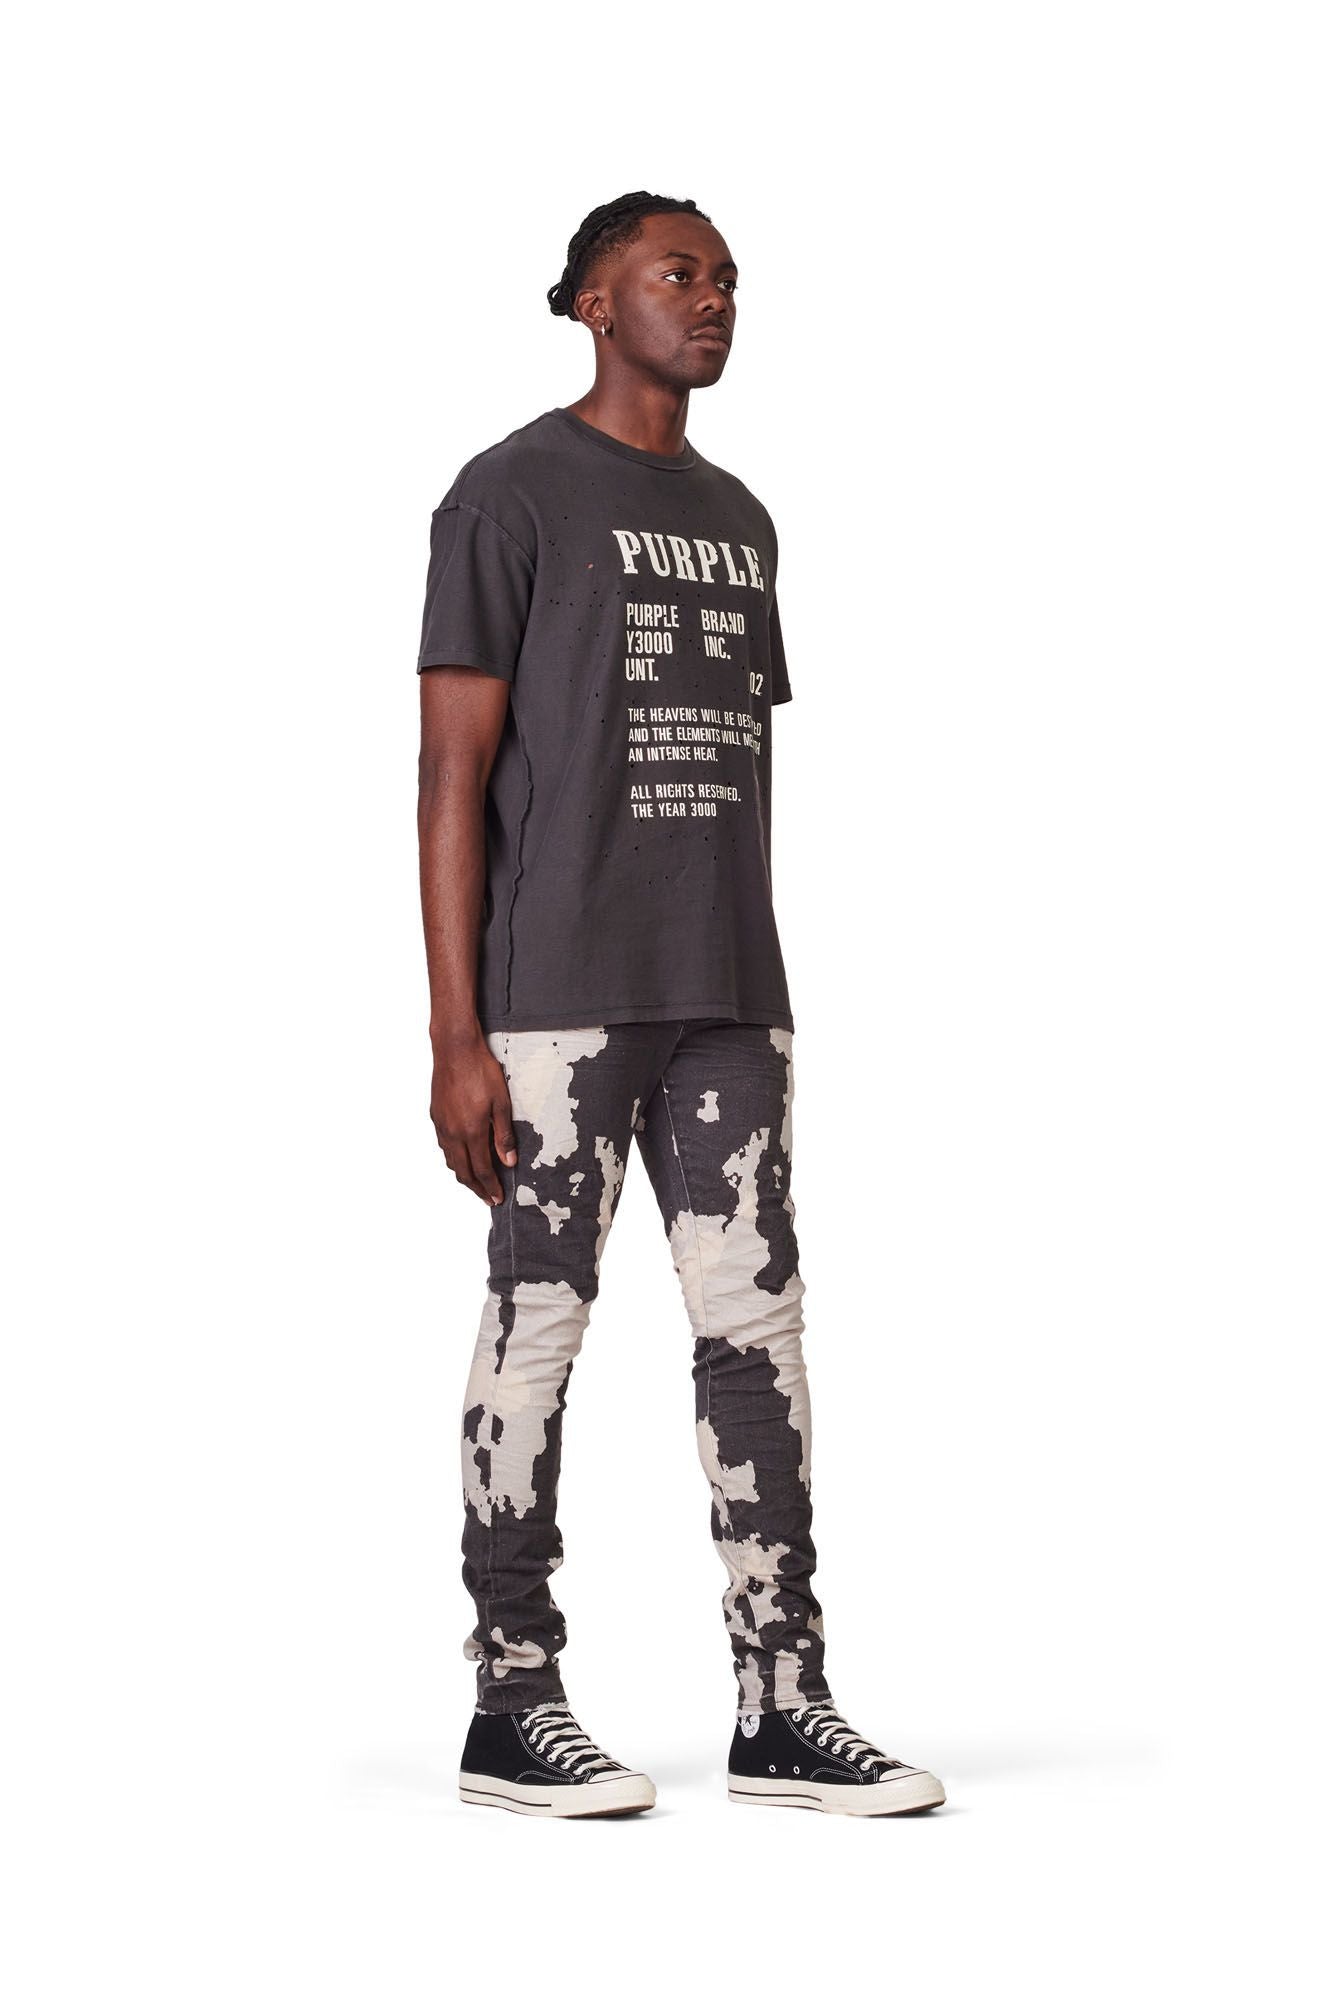 PURPLE BRAND - Men's Denim Jean - Low Rise Skinny - Style No. P001 - Printed Denim Rorschach - Model Side Pose